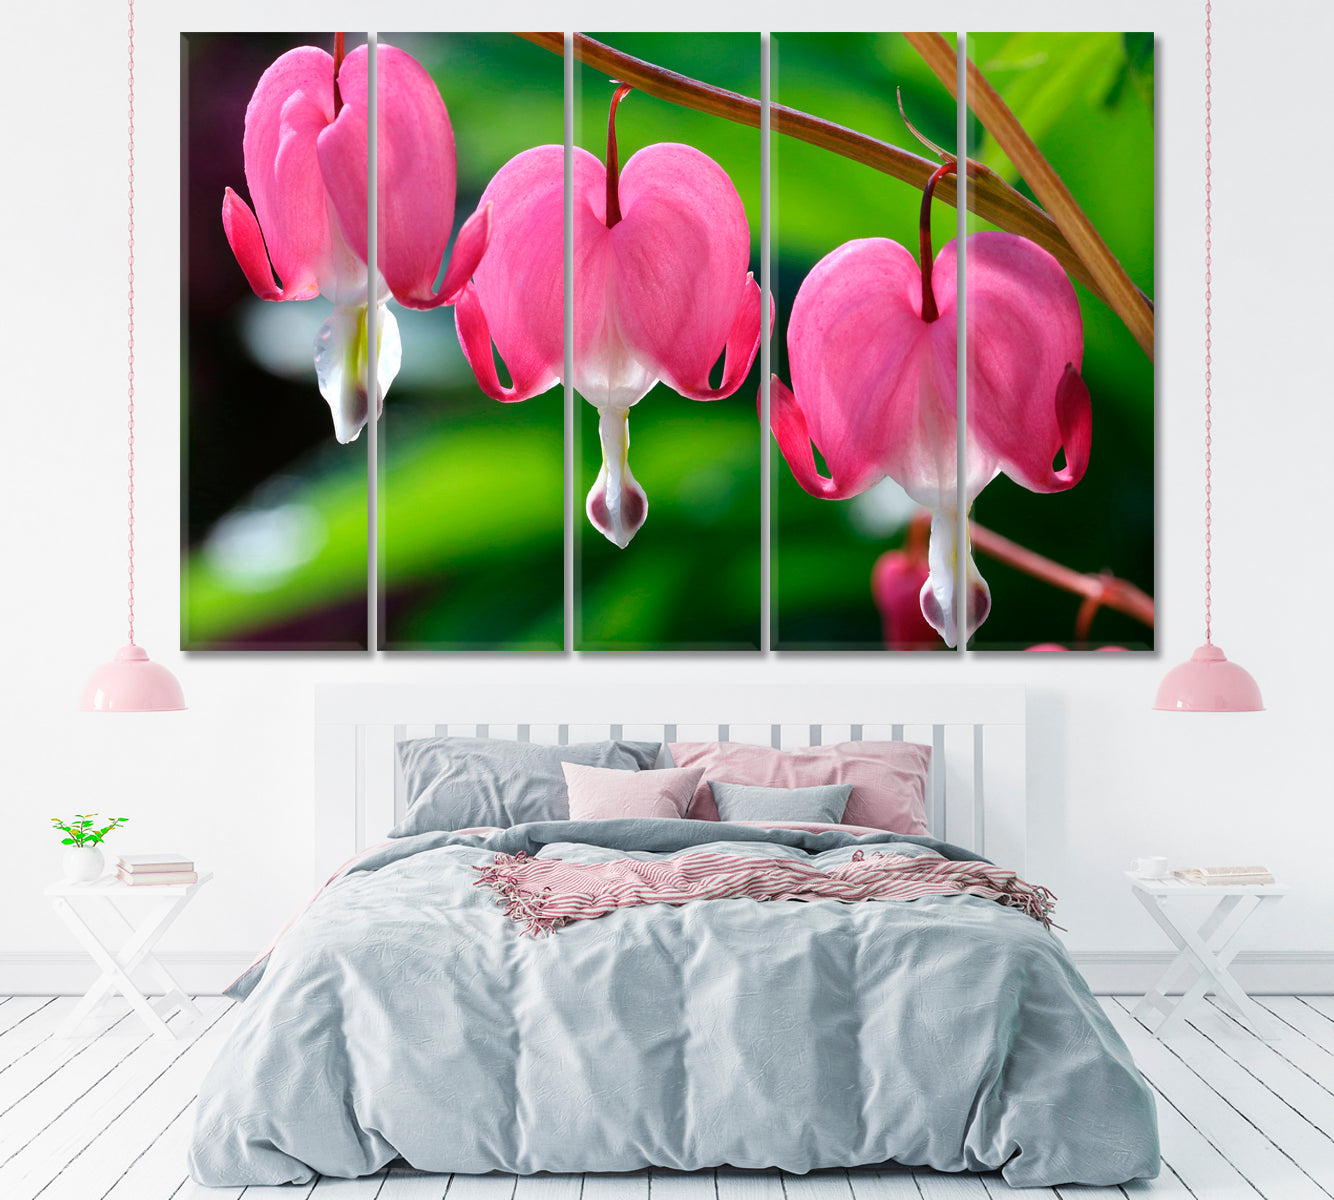 Bleeding Heart Flower Canvas Print ArtLexy 5 Panels 36"x24" inches 